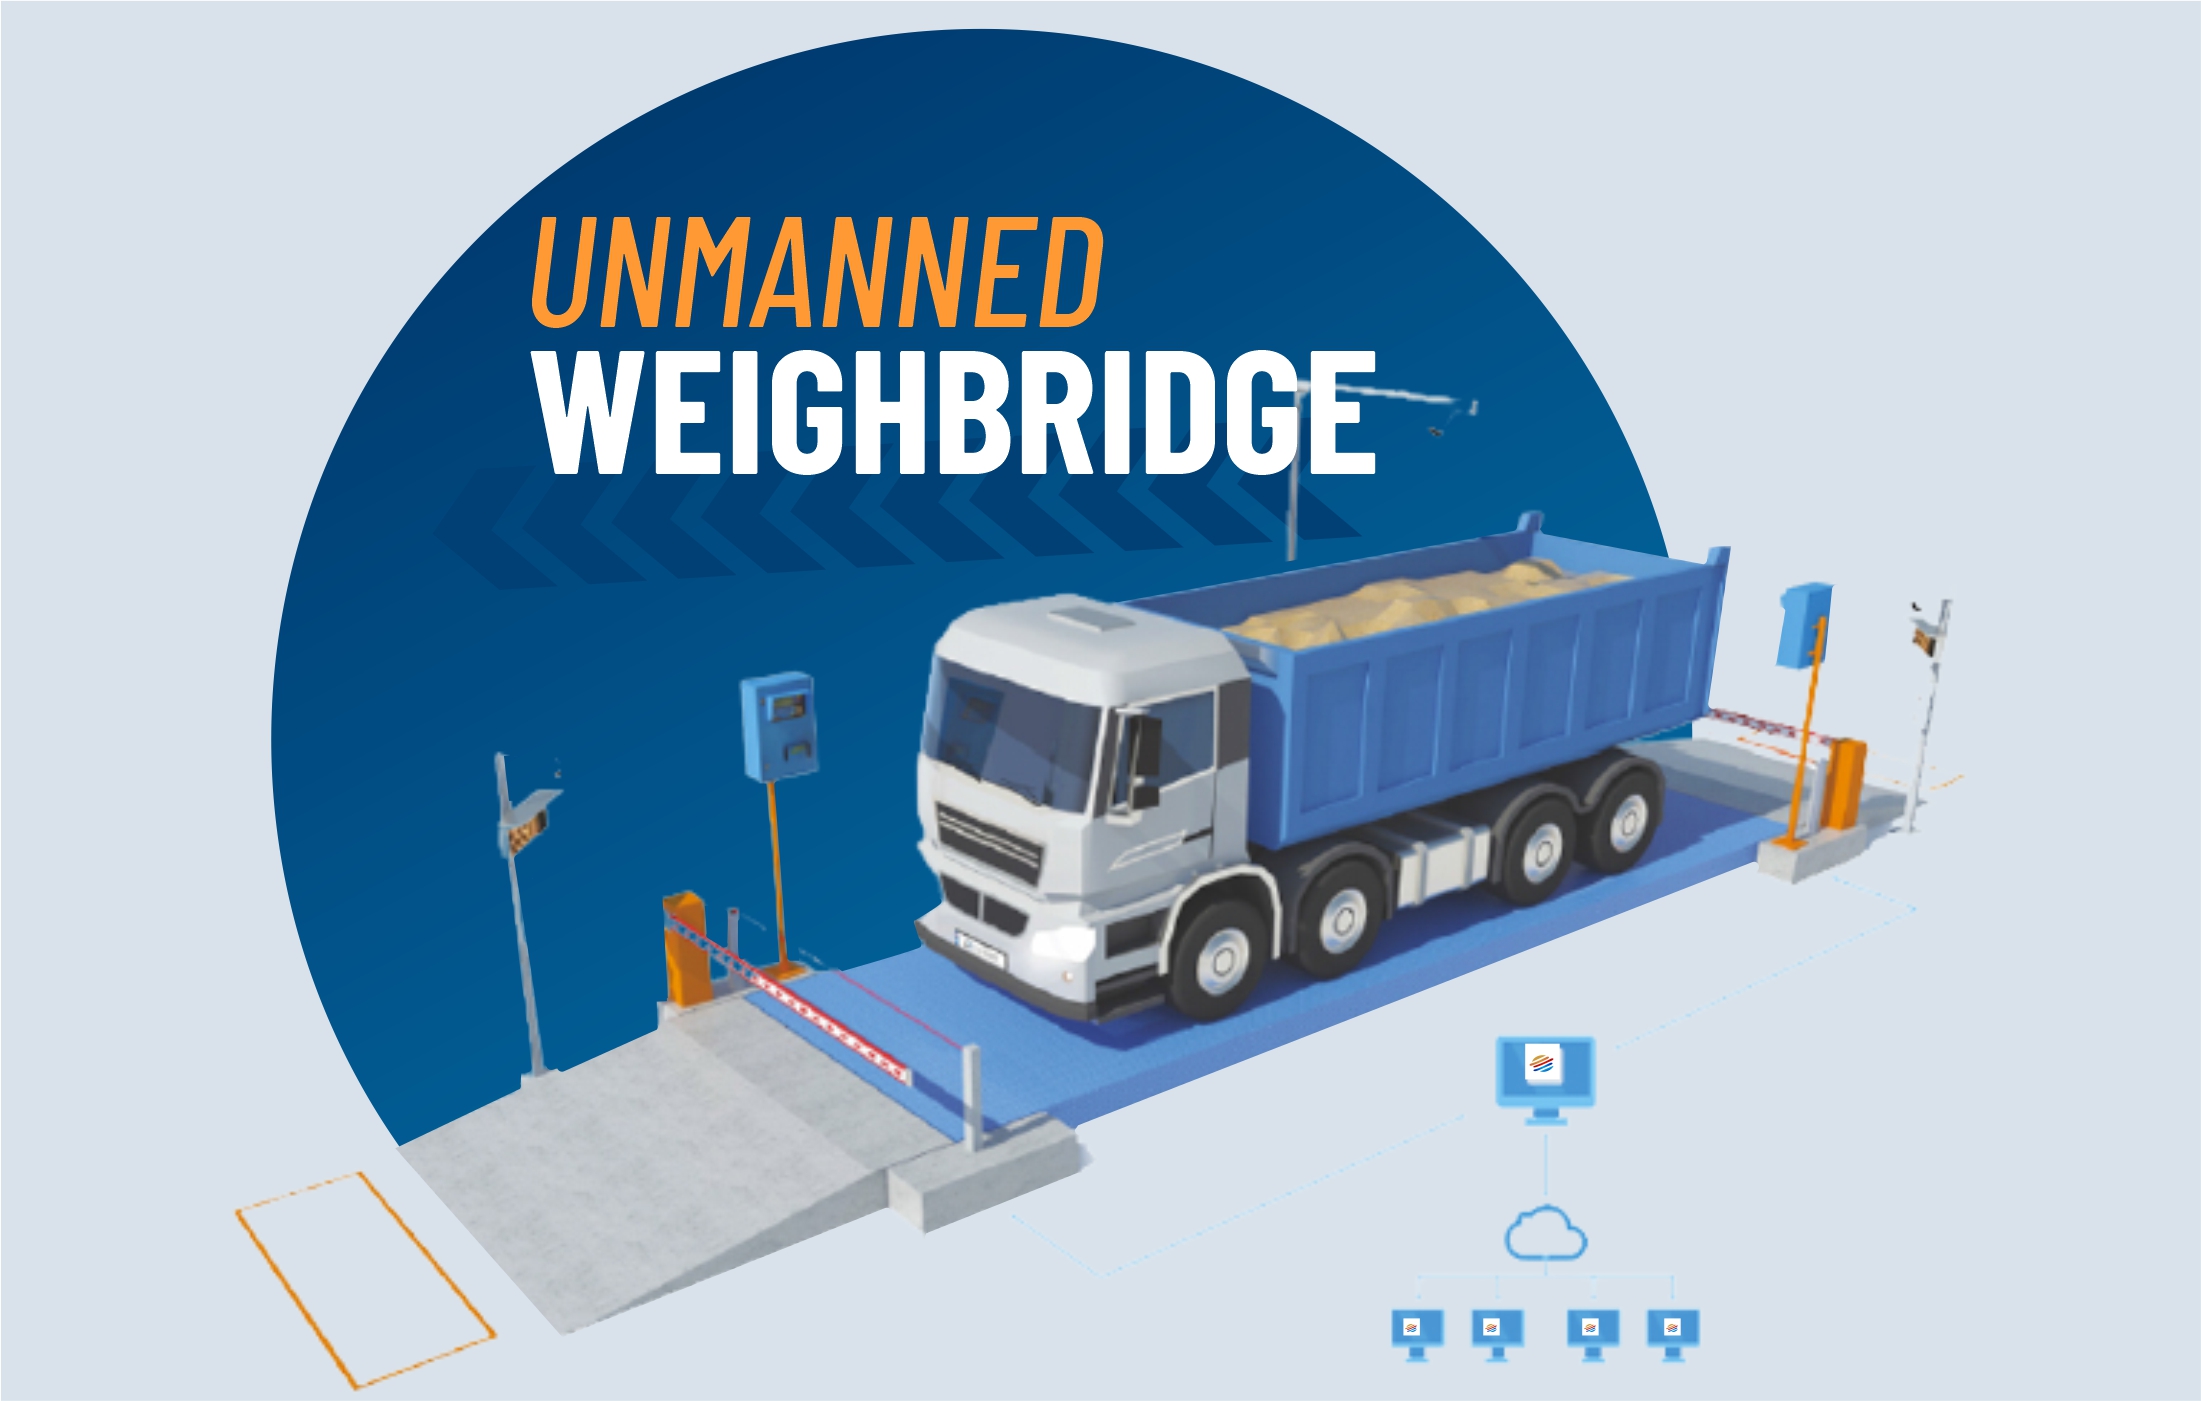 Weighbridge Automation Solution